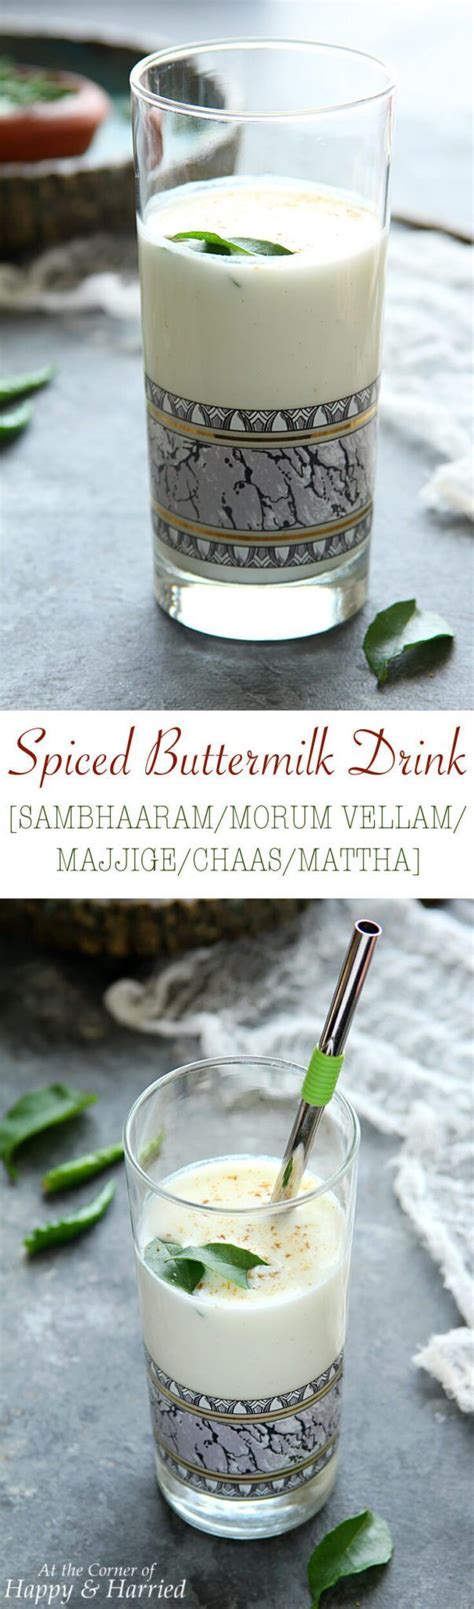 spiced buttermilk drink sambhaaram majjige chaas recipe yogurt drinks spices drinks